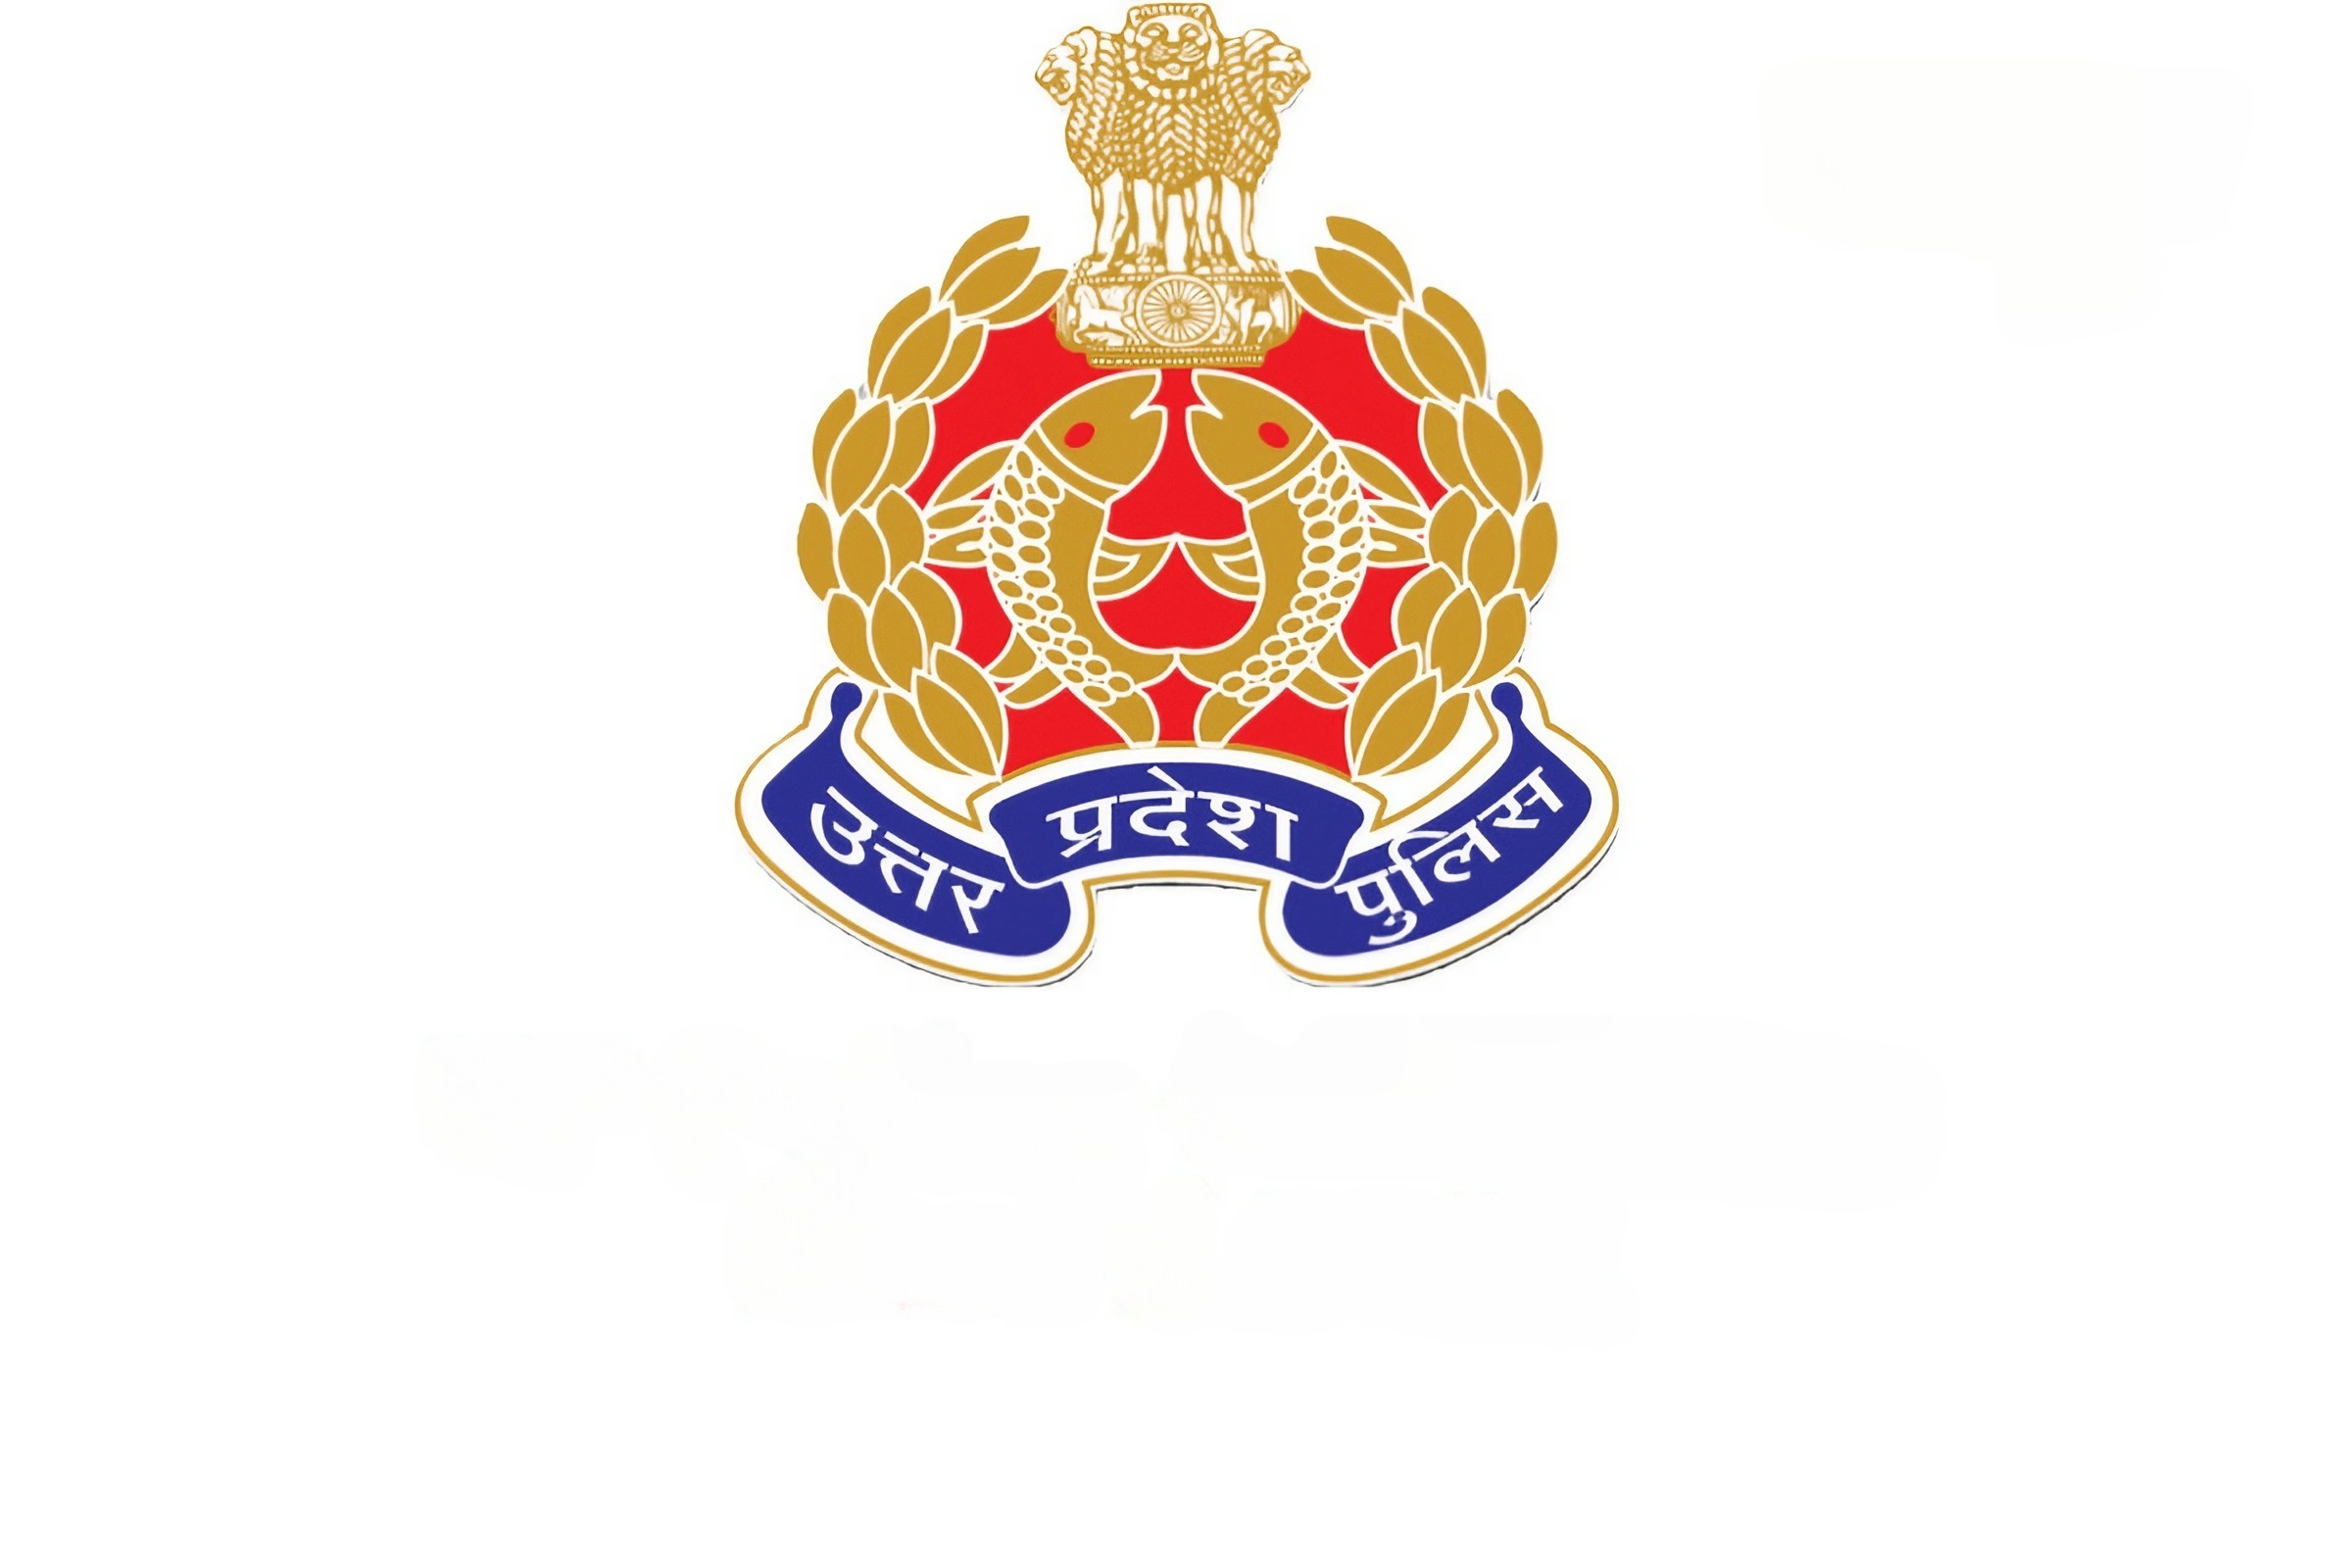 Uttar Pradesh Police - Badge With White Background